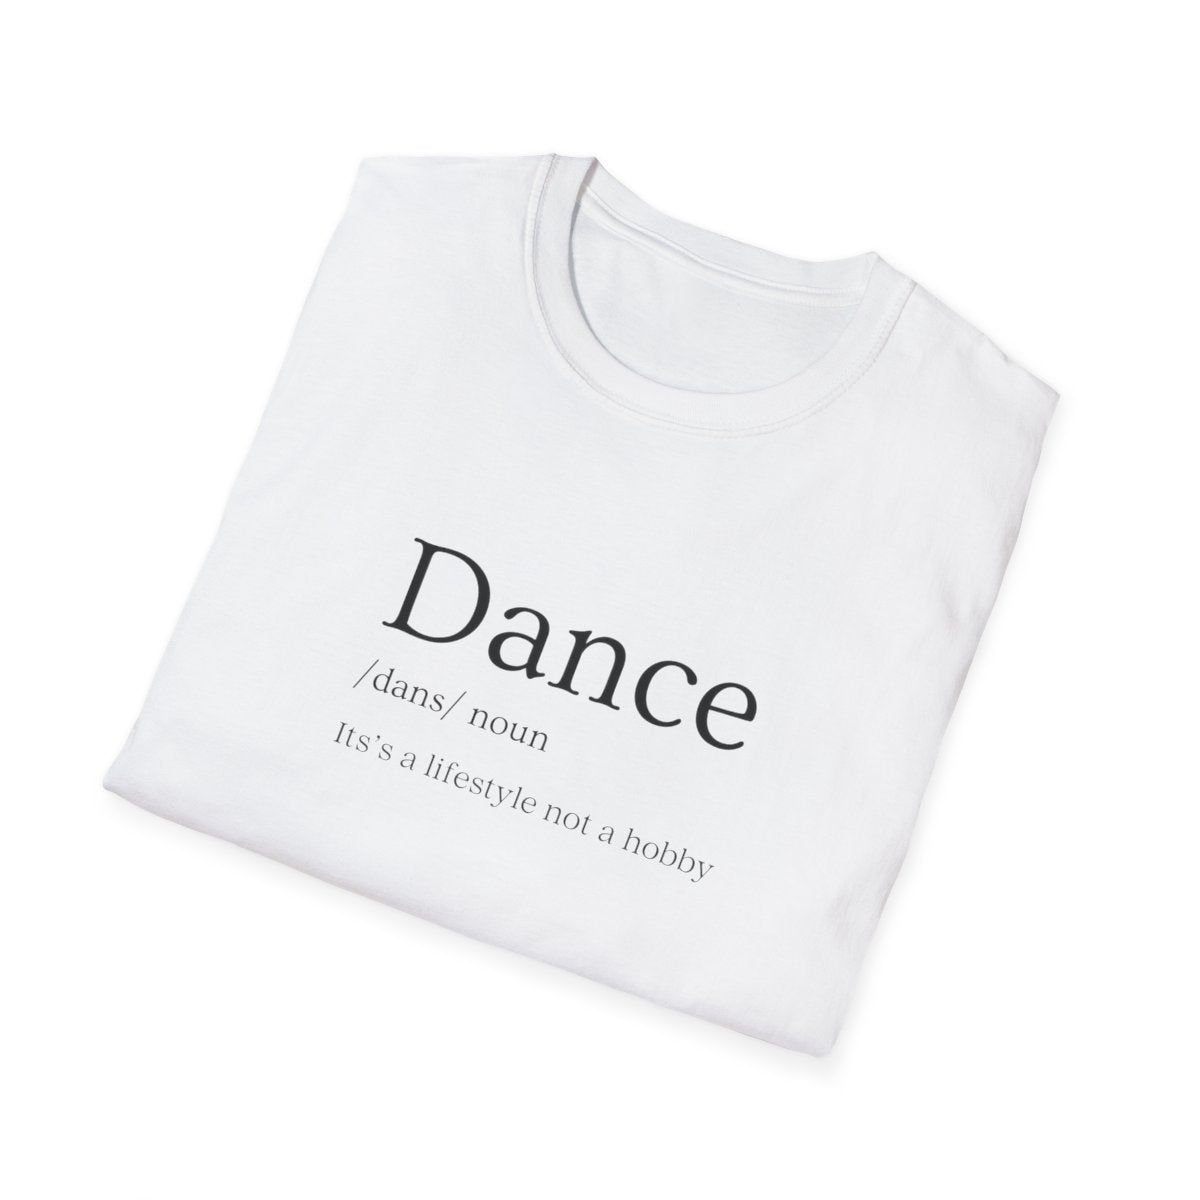 Dance Definition T-shirt